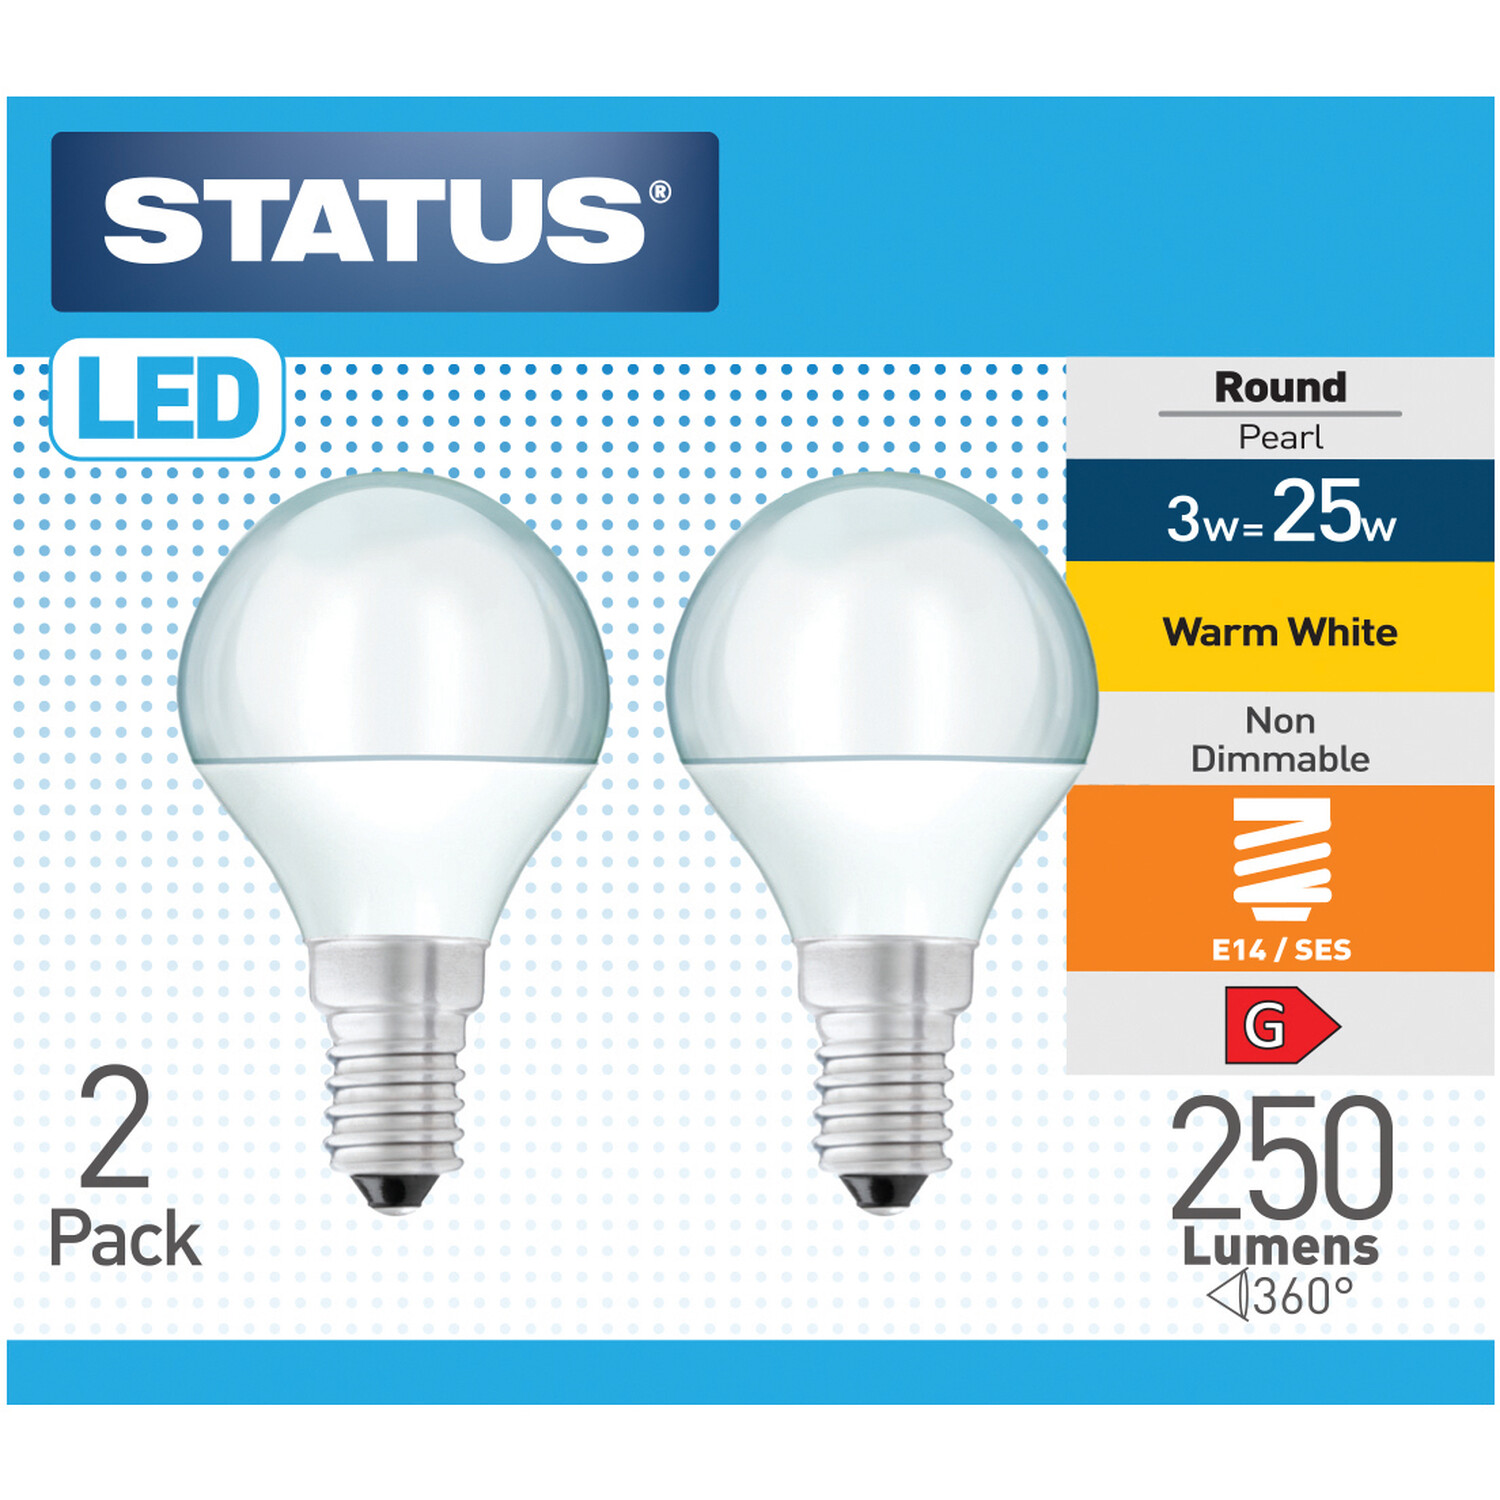 Status 2 Pack SES LED 3W Round Light Bulb Image 1